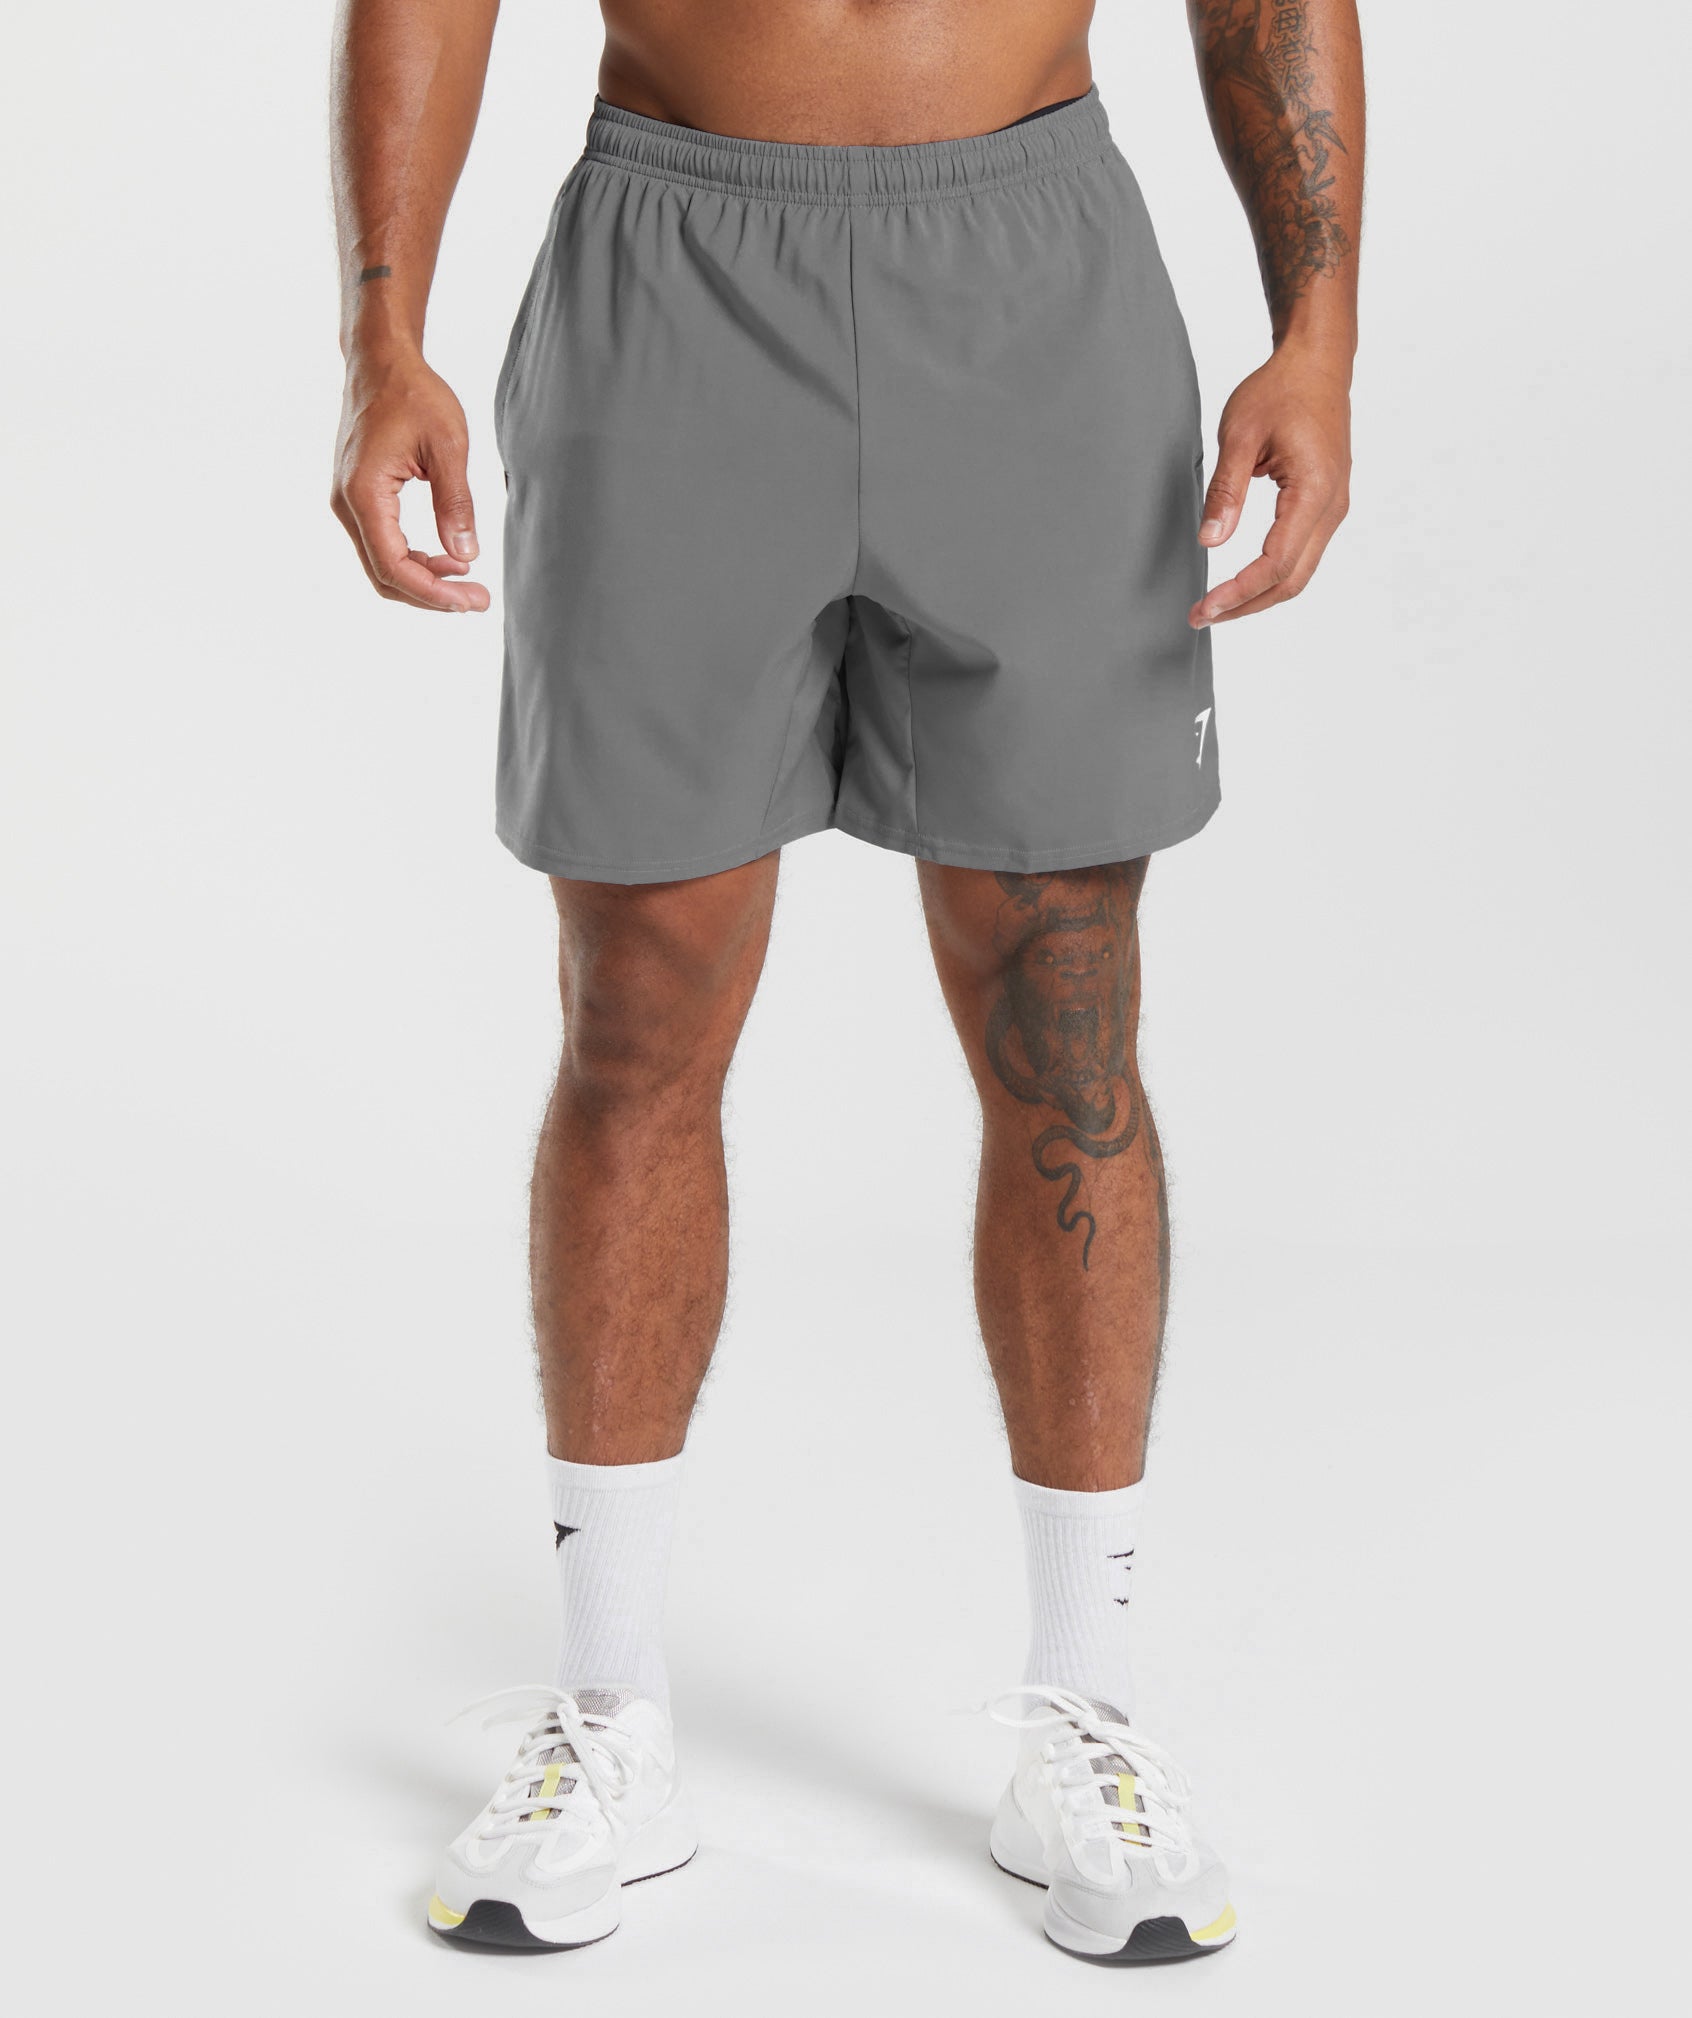 Arrival 7" Shorts en Charcoal Grey